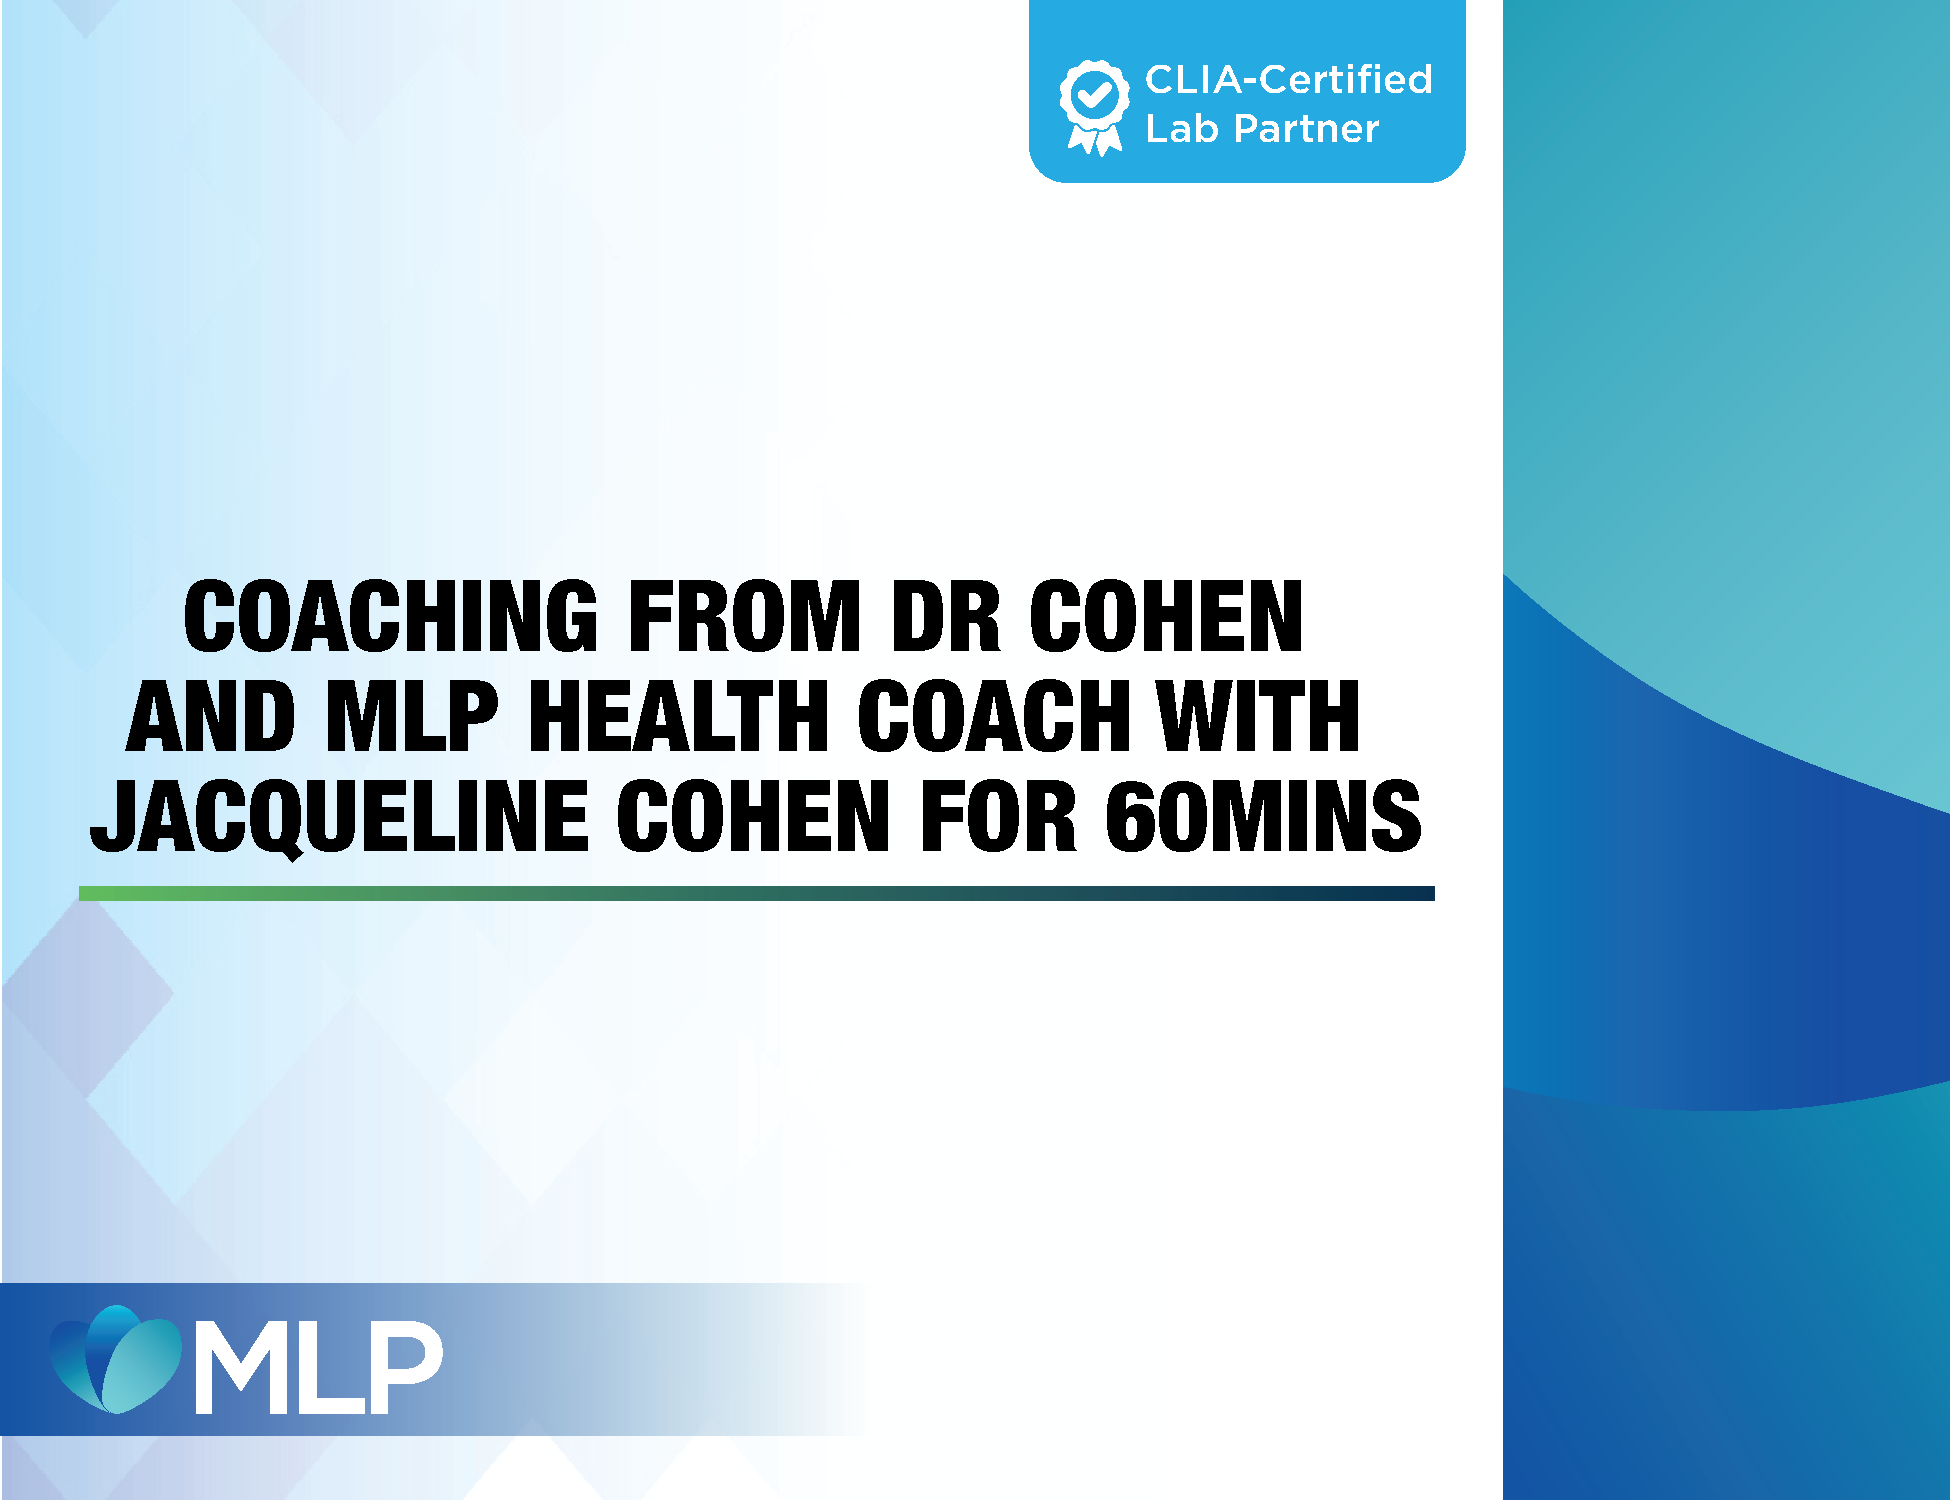 Dr Cohen and MLP Health Coach with Jacqueline Cohen for 60 mins